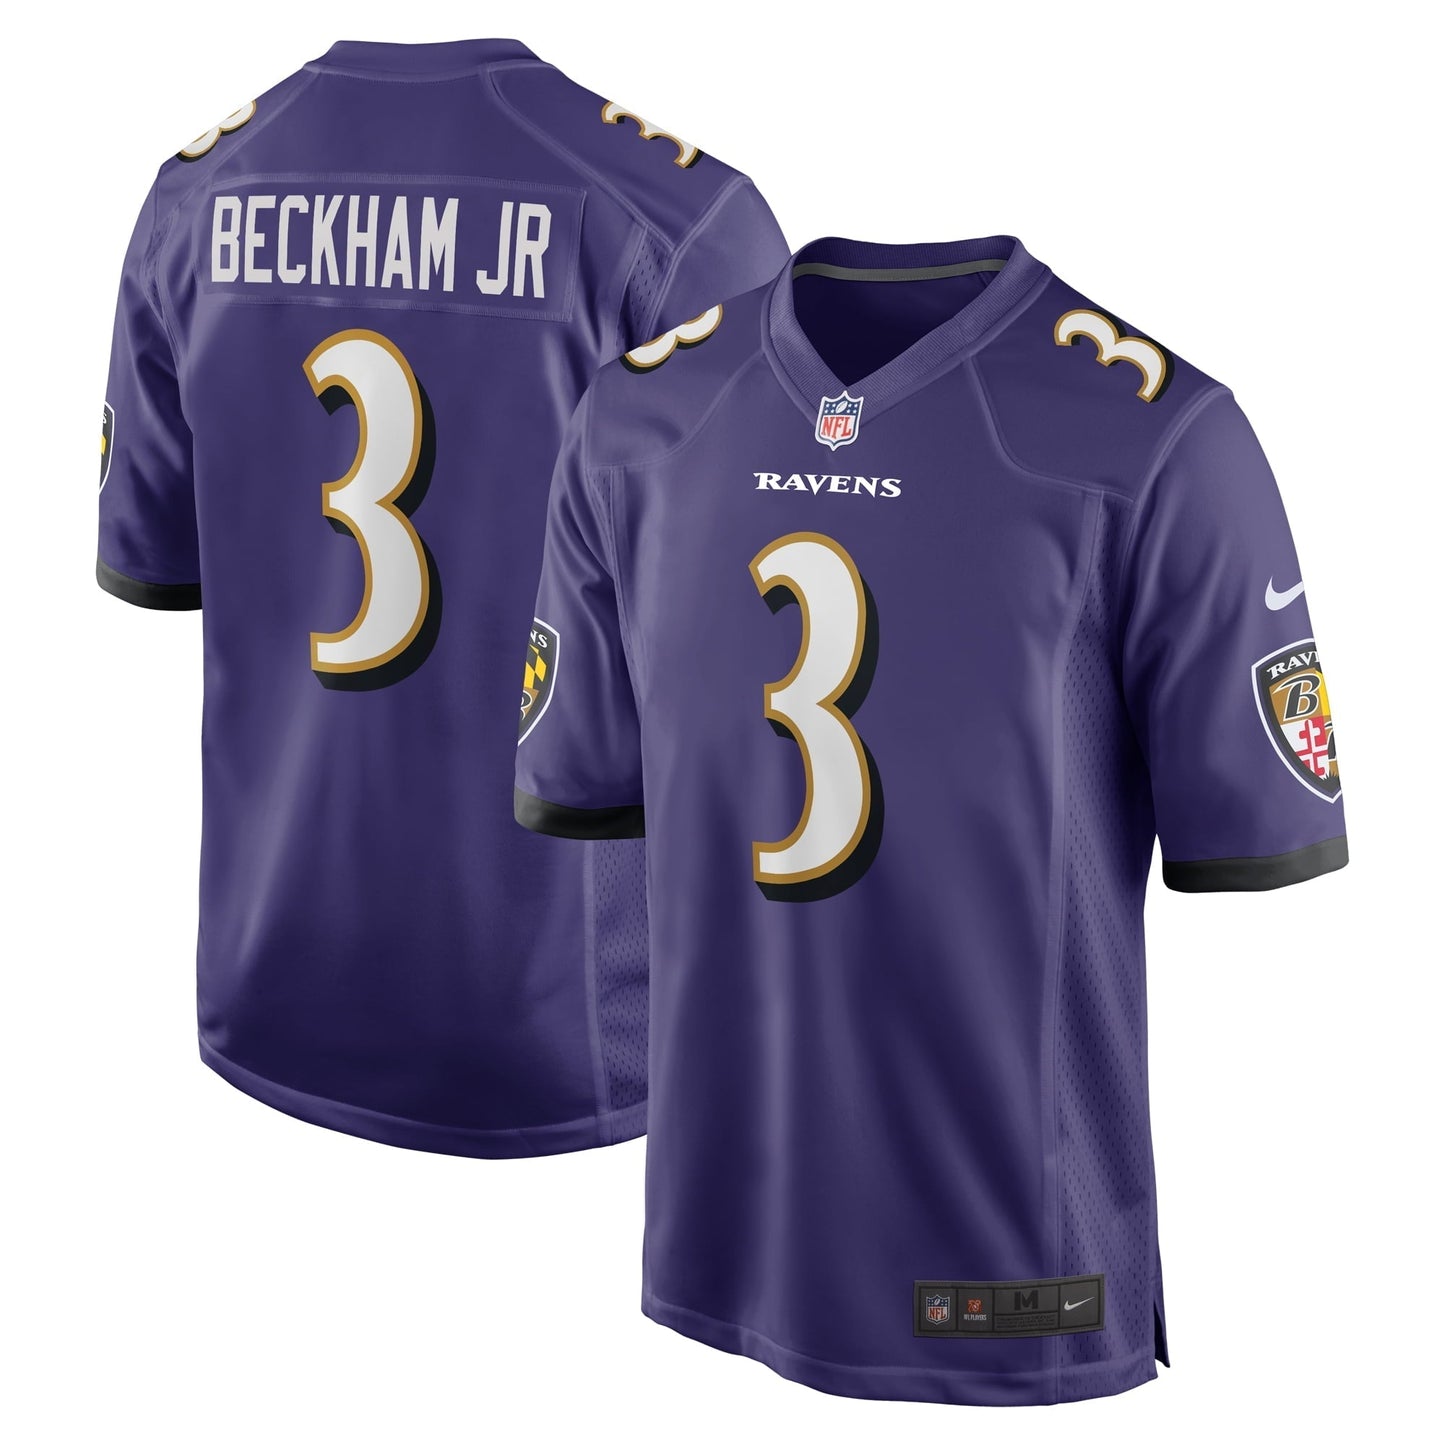 Men's Nike Odell Beckham Jr. Purple Baltimore Ravens Game Jersey